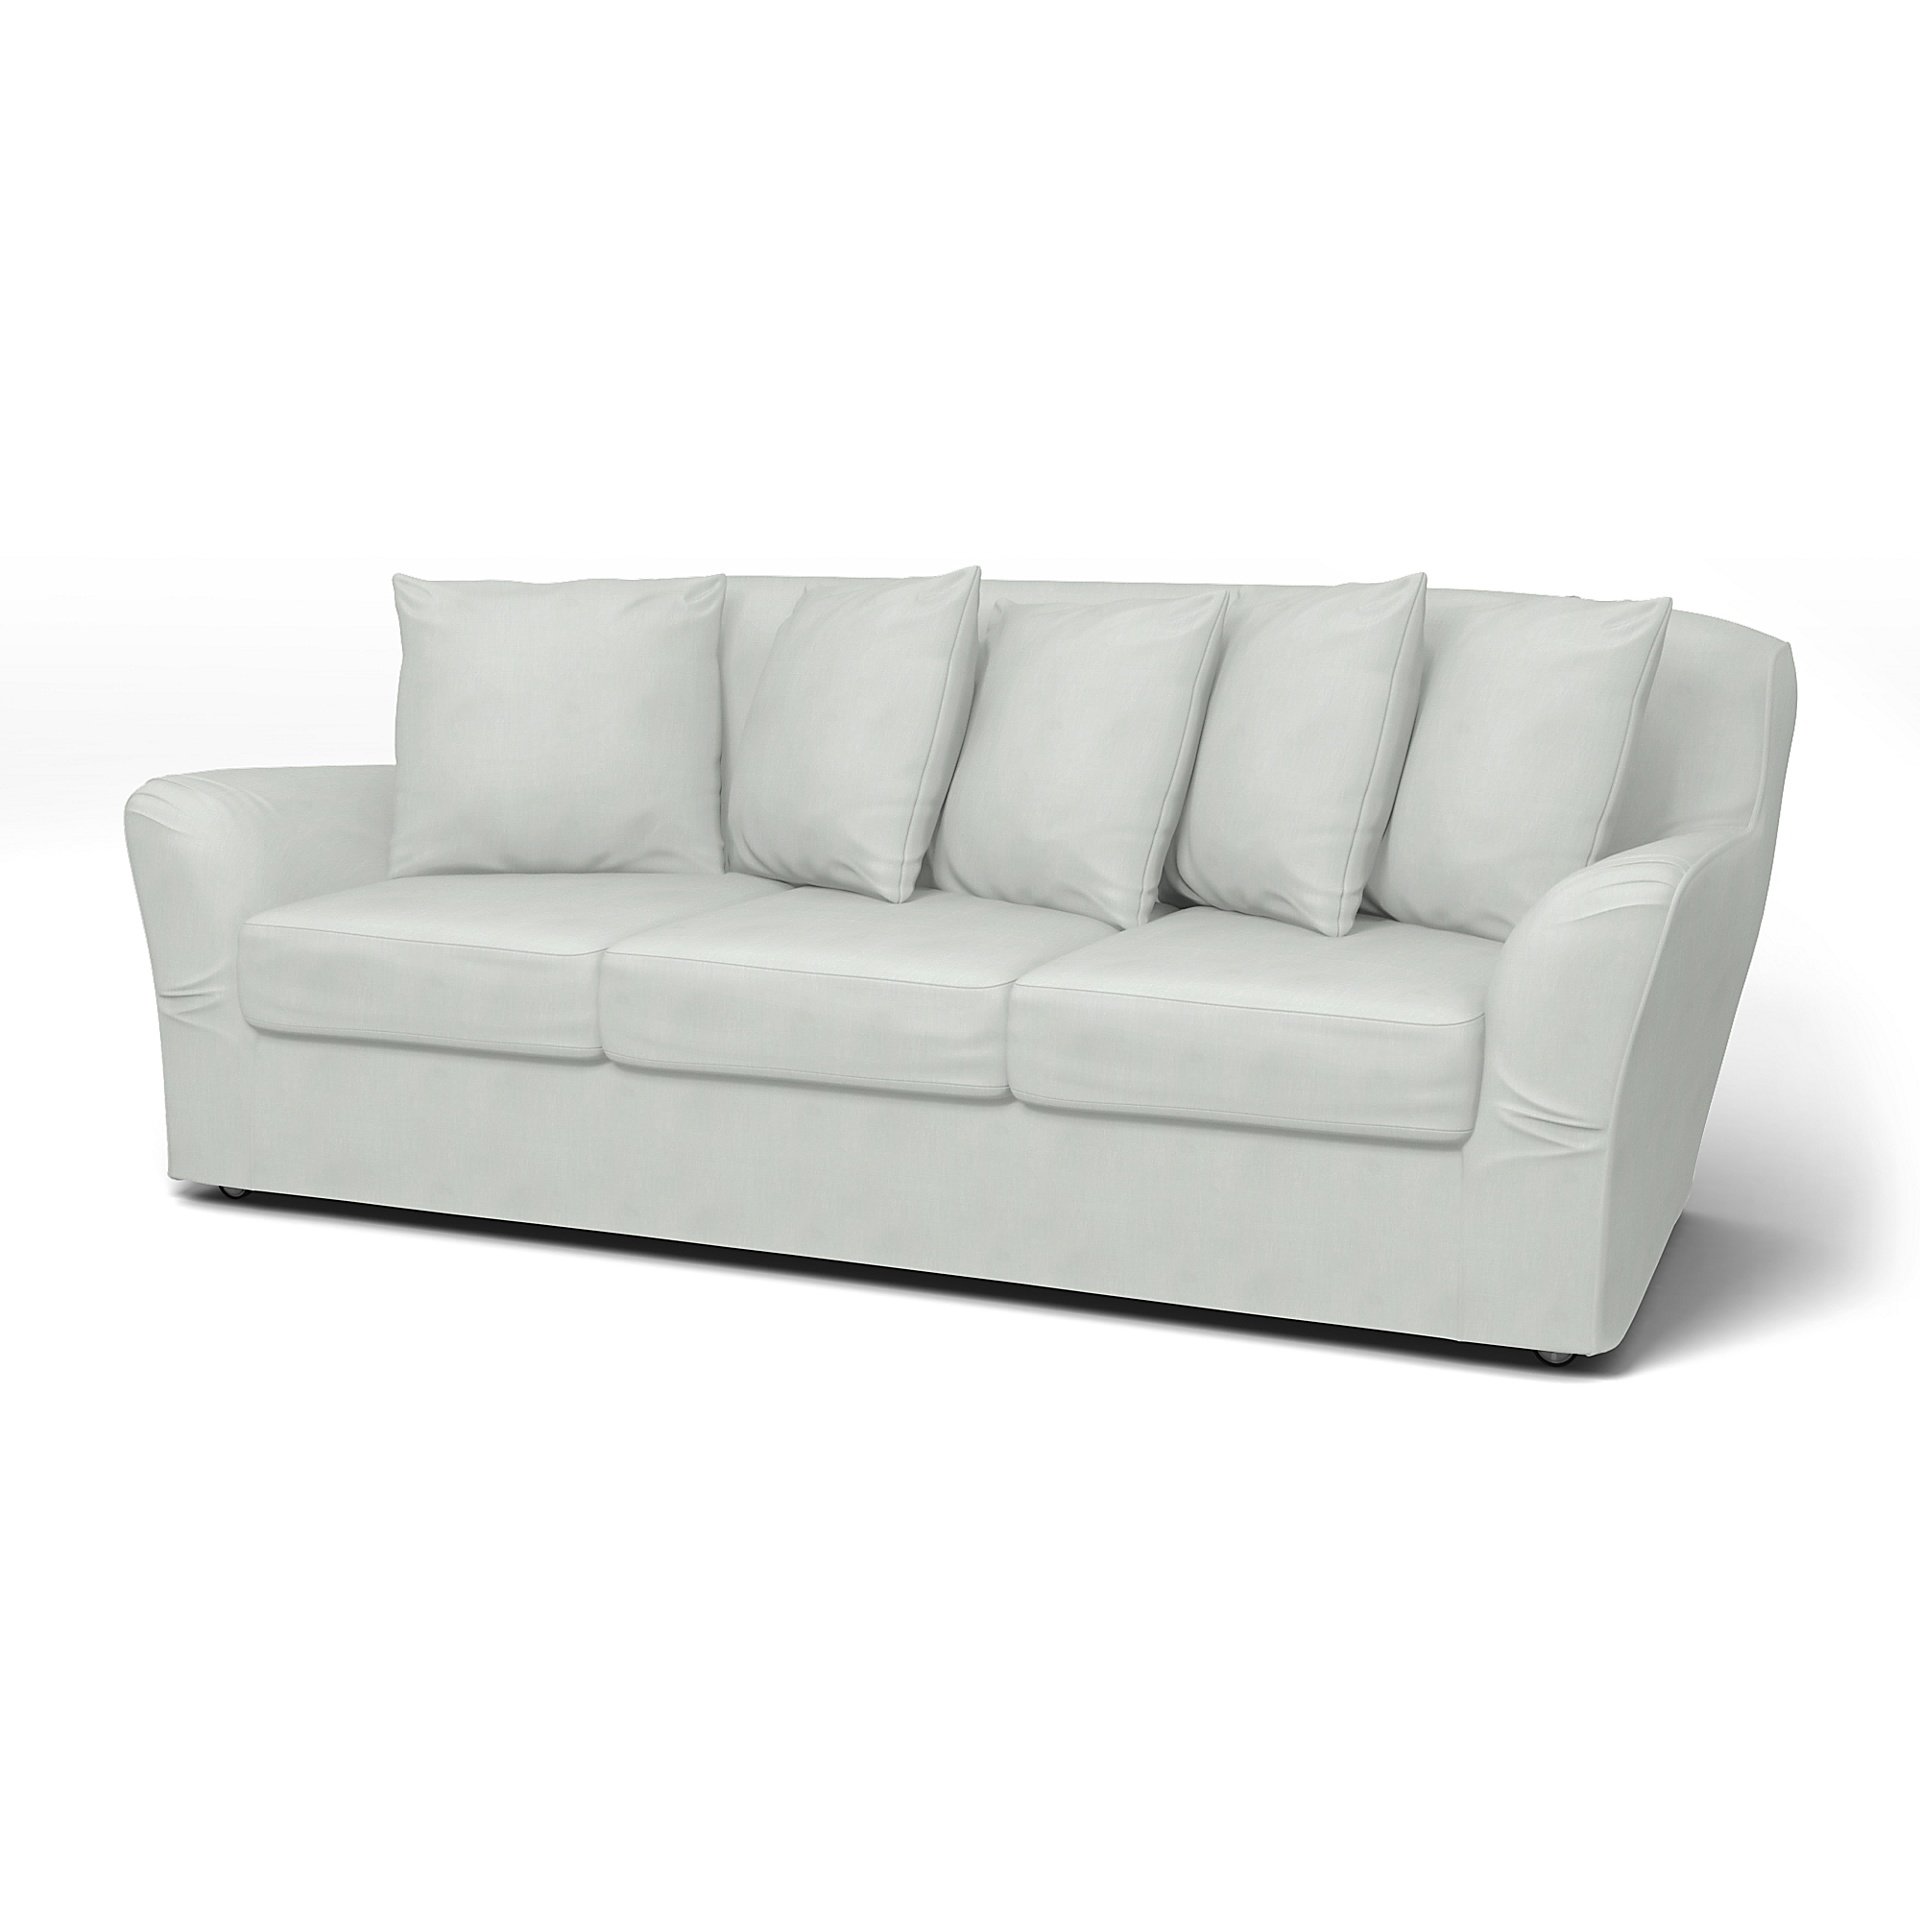 IKEA - Tomelilla 3 seater sofa, Silver Grey, Linen - Bemz